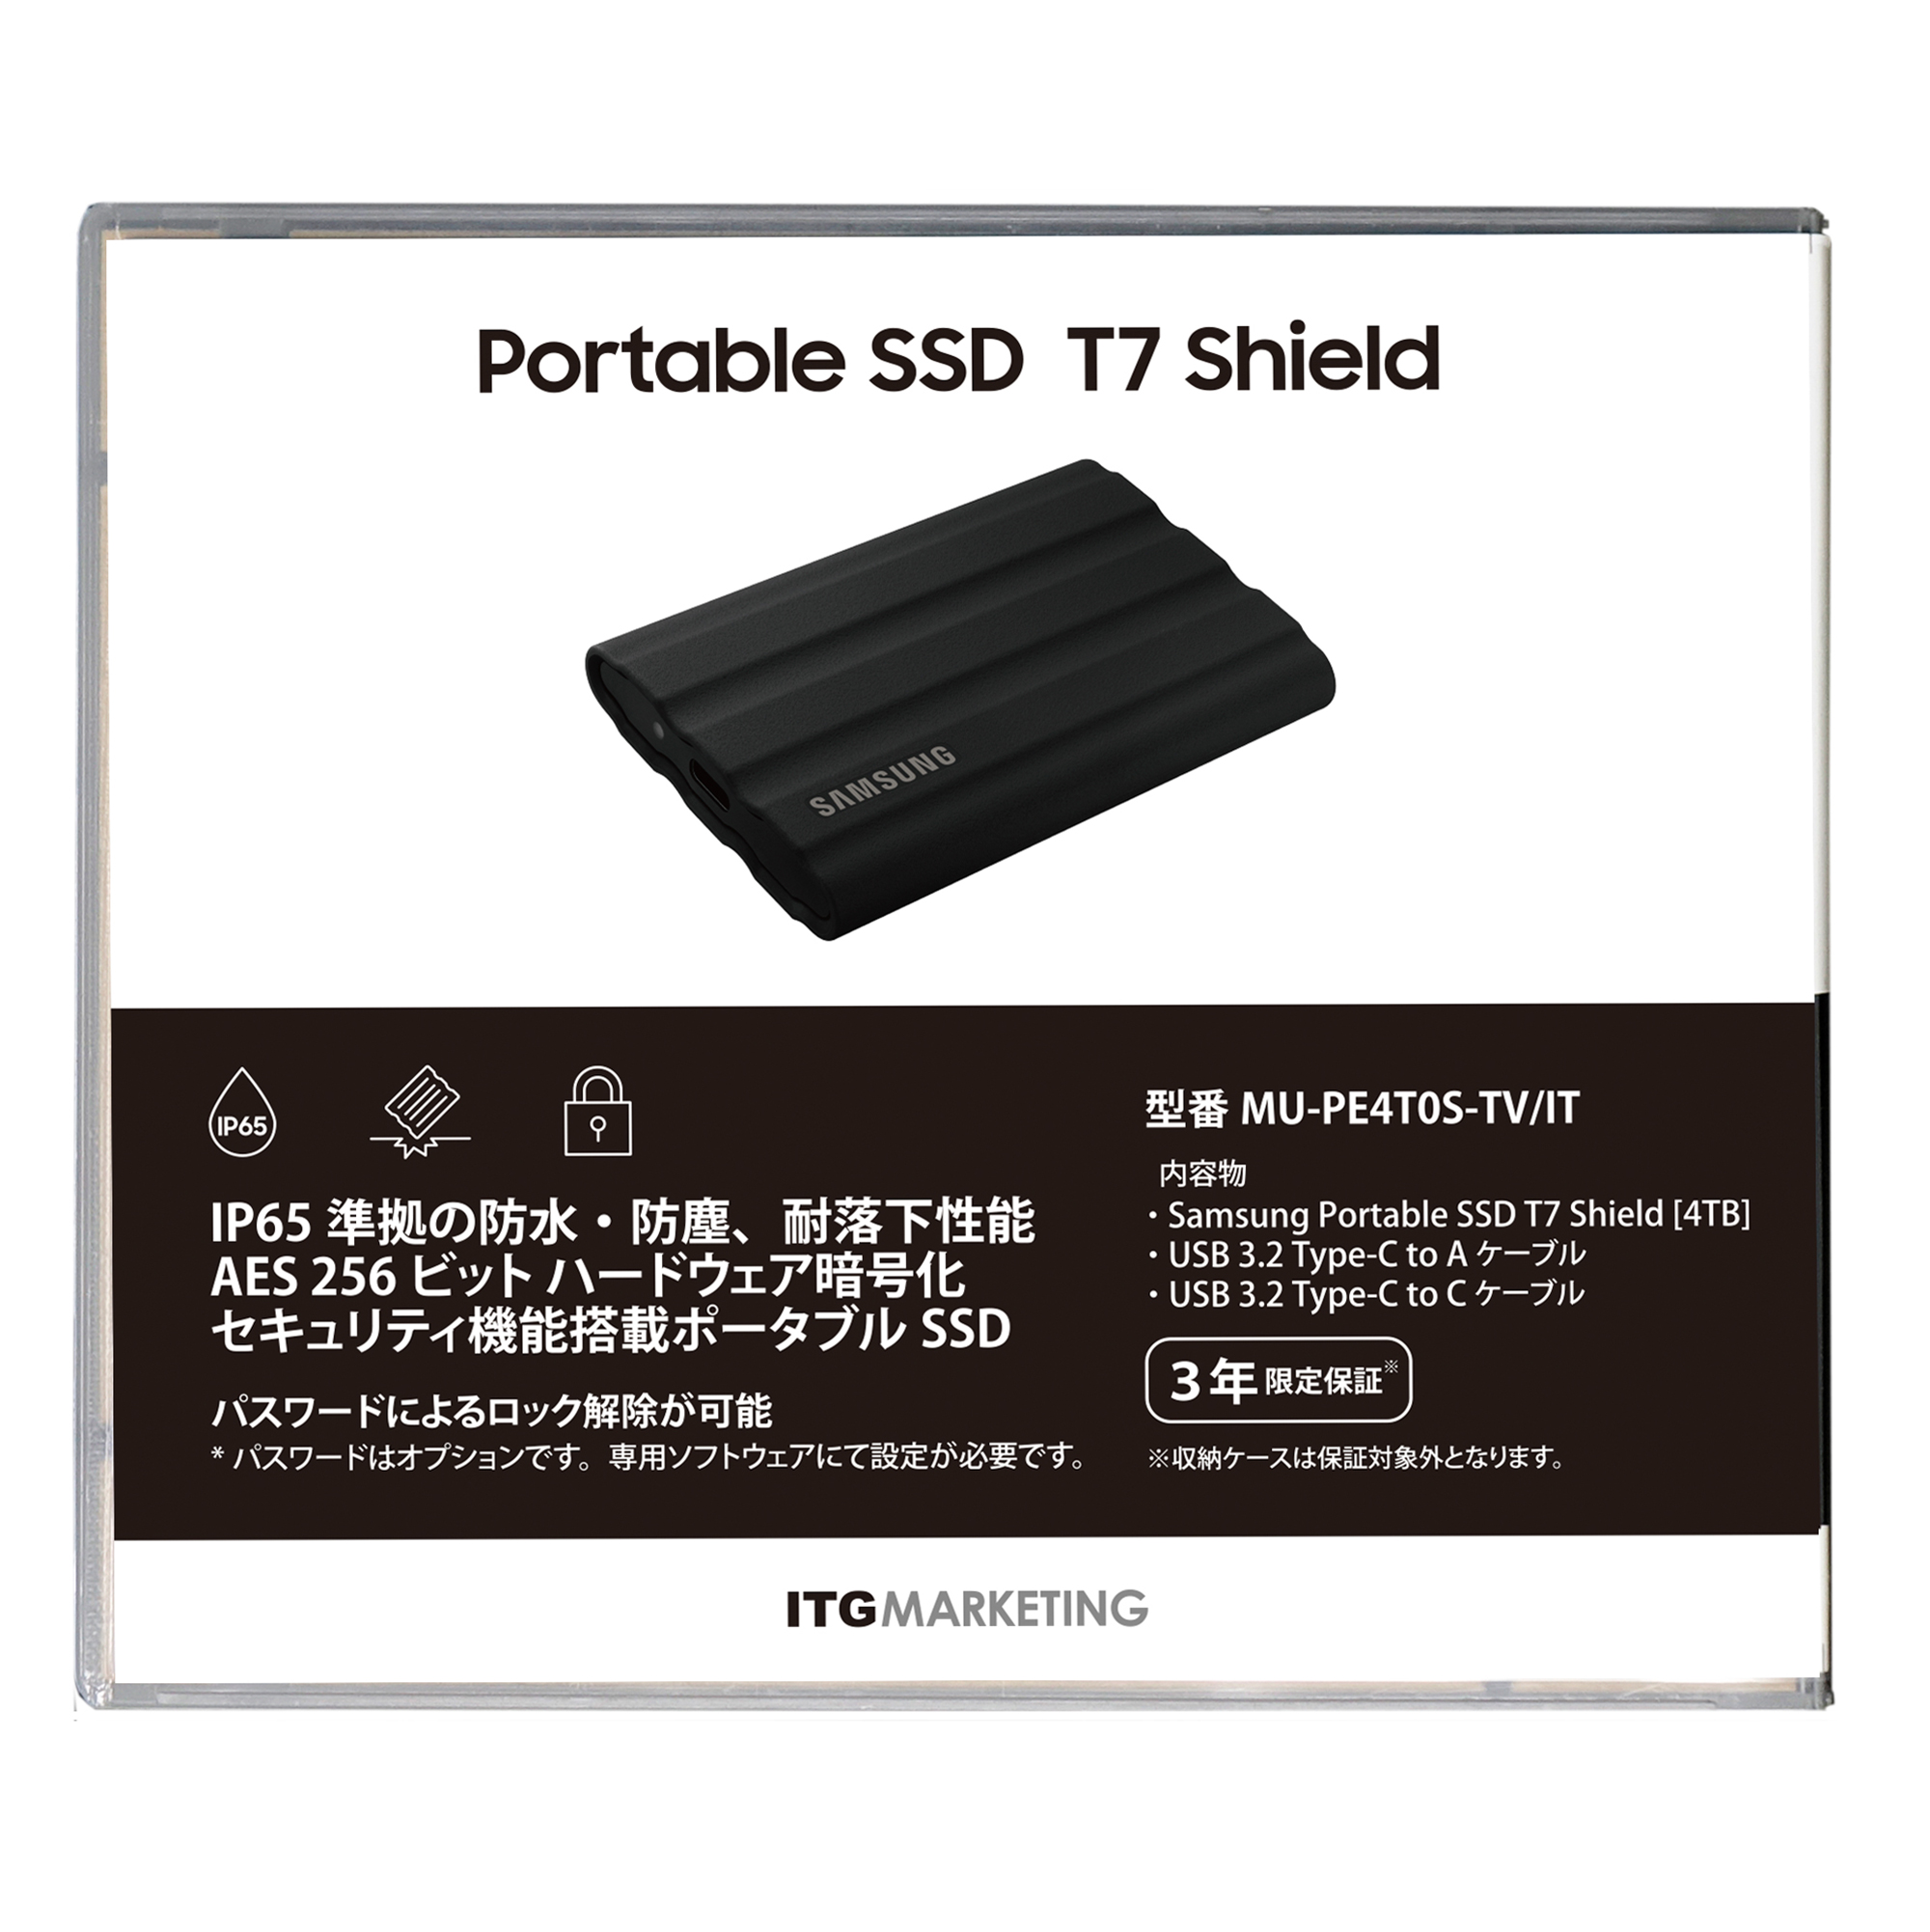 Portable SSD T7 Shield (4TB) 放送局向け専用ケース入りモデル